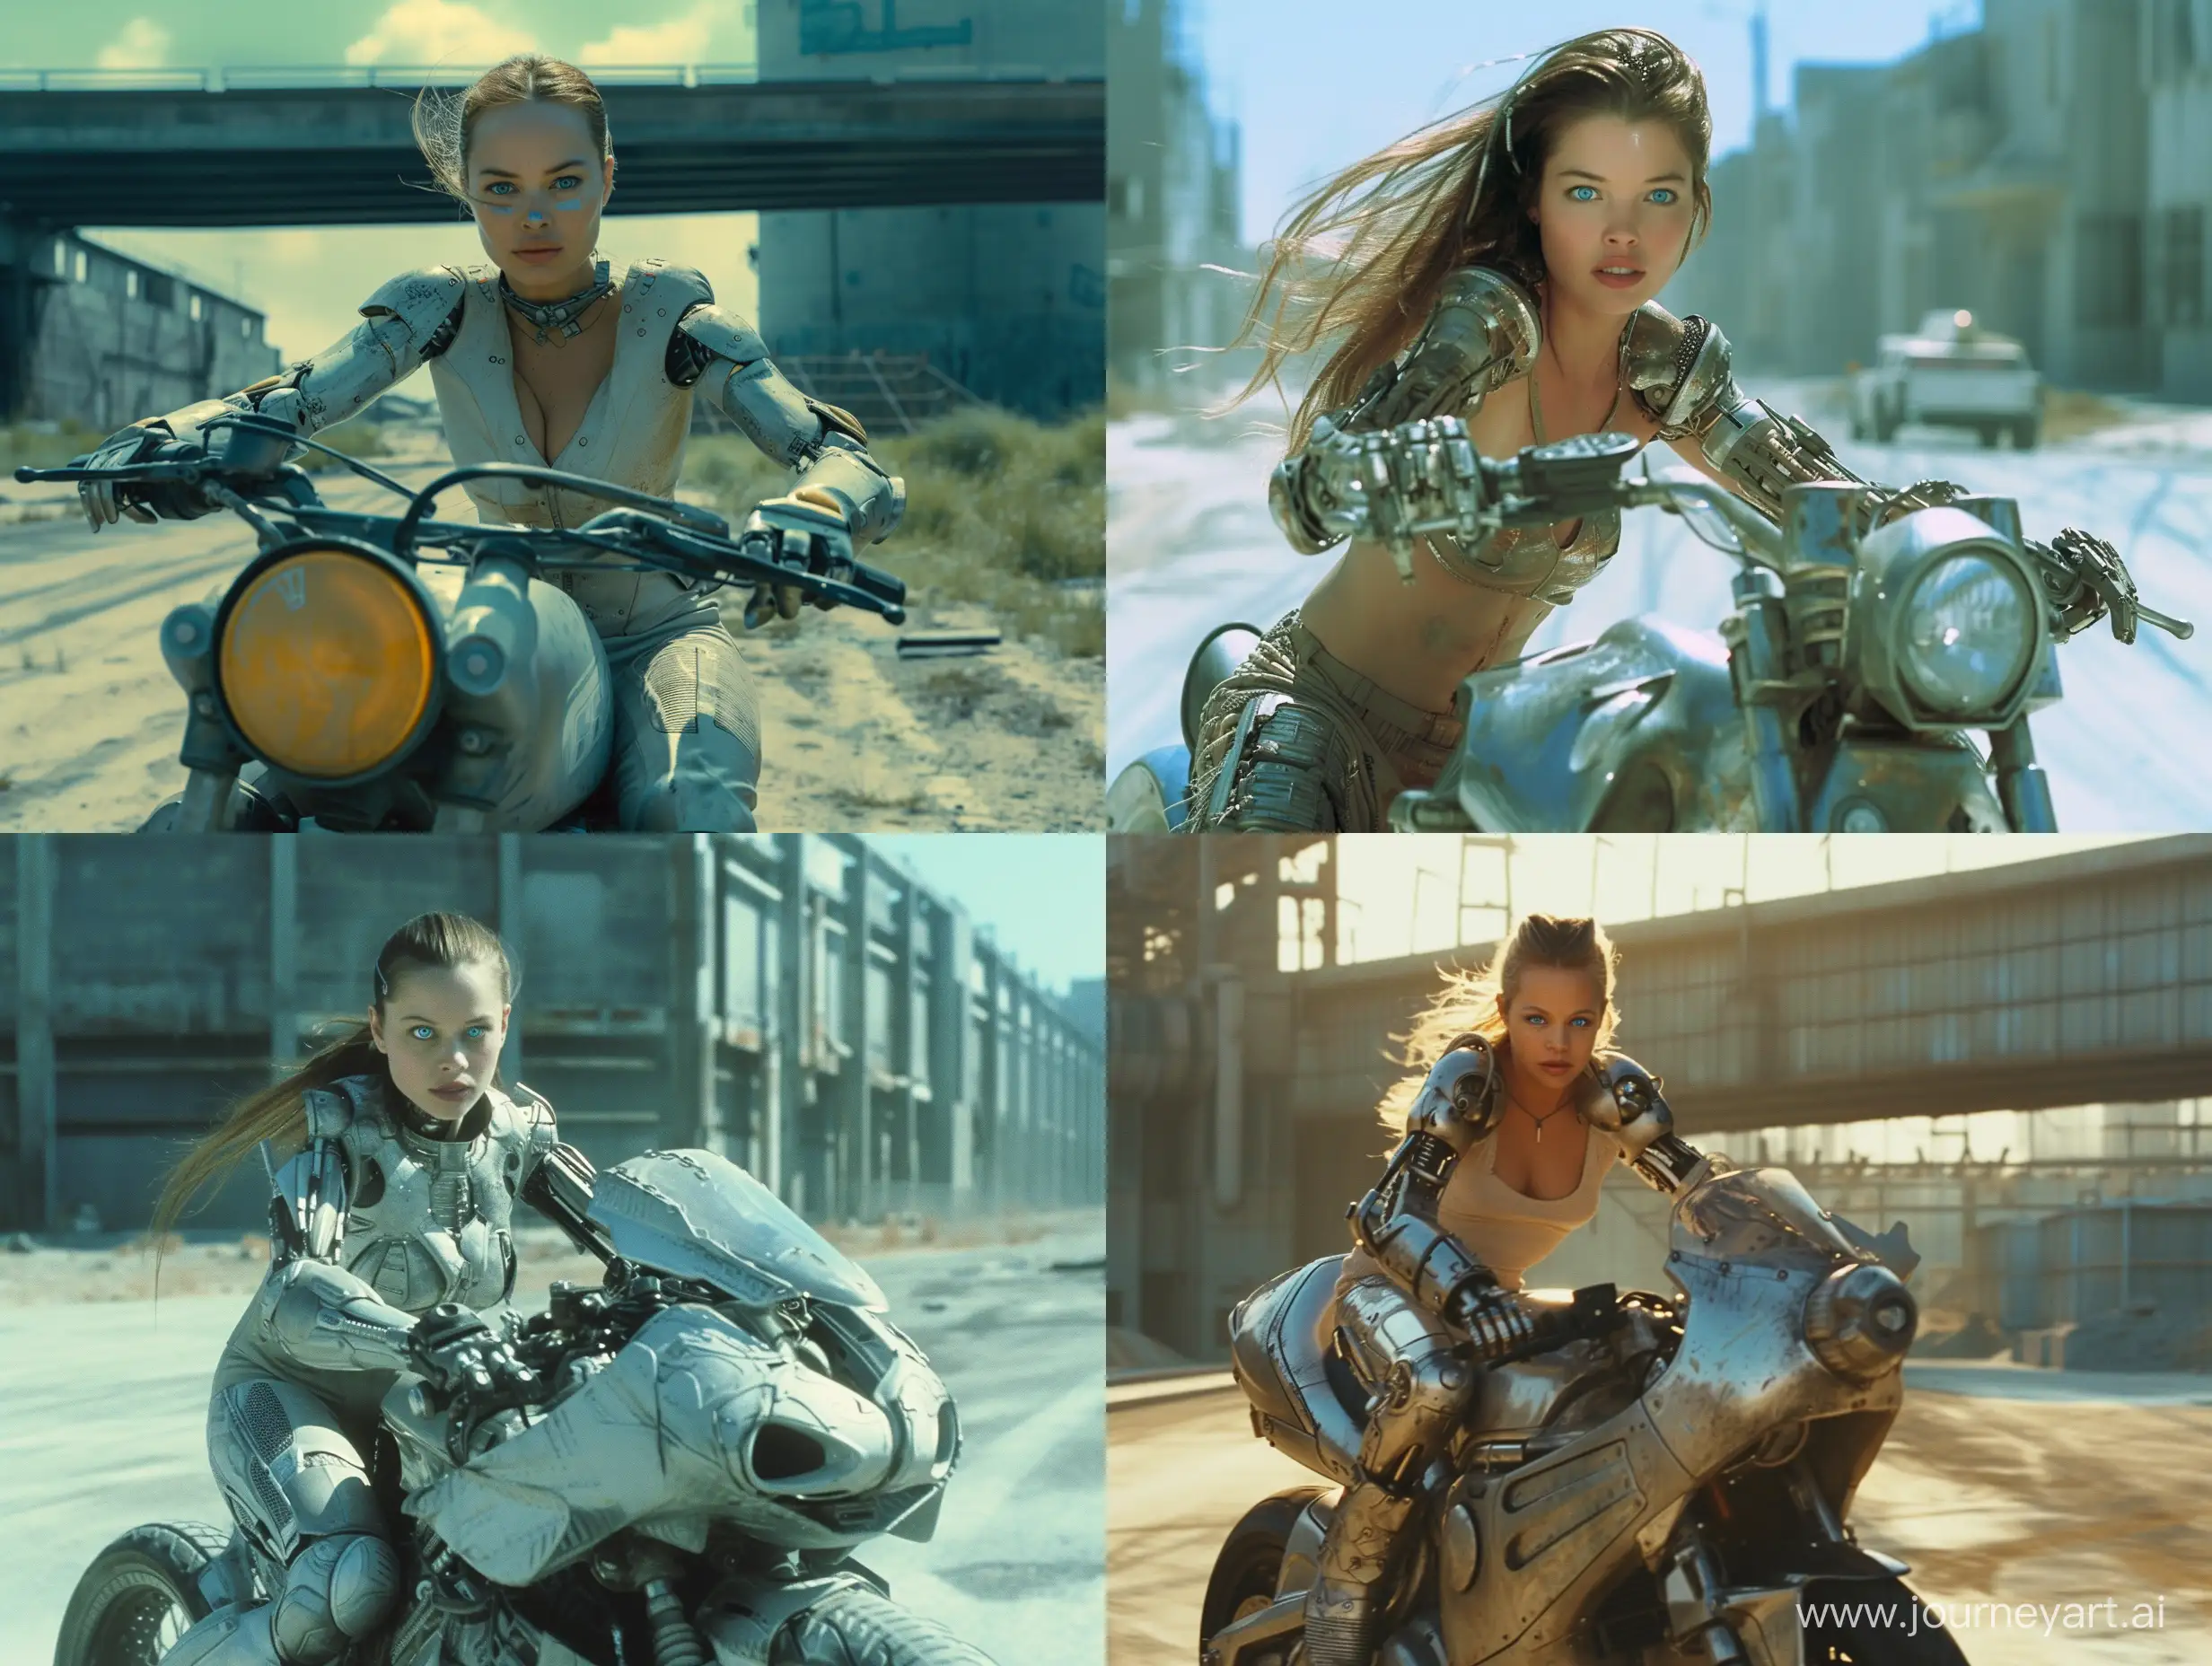 Nostalgic-Cyborg-Woman-Riding-Motorcycle-in-Dystopian-Open-Landscape